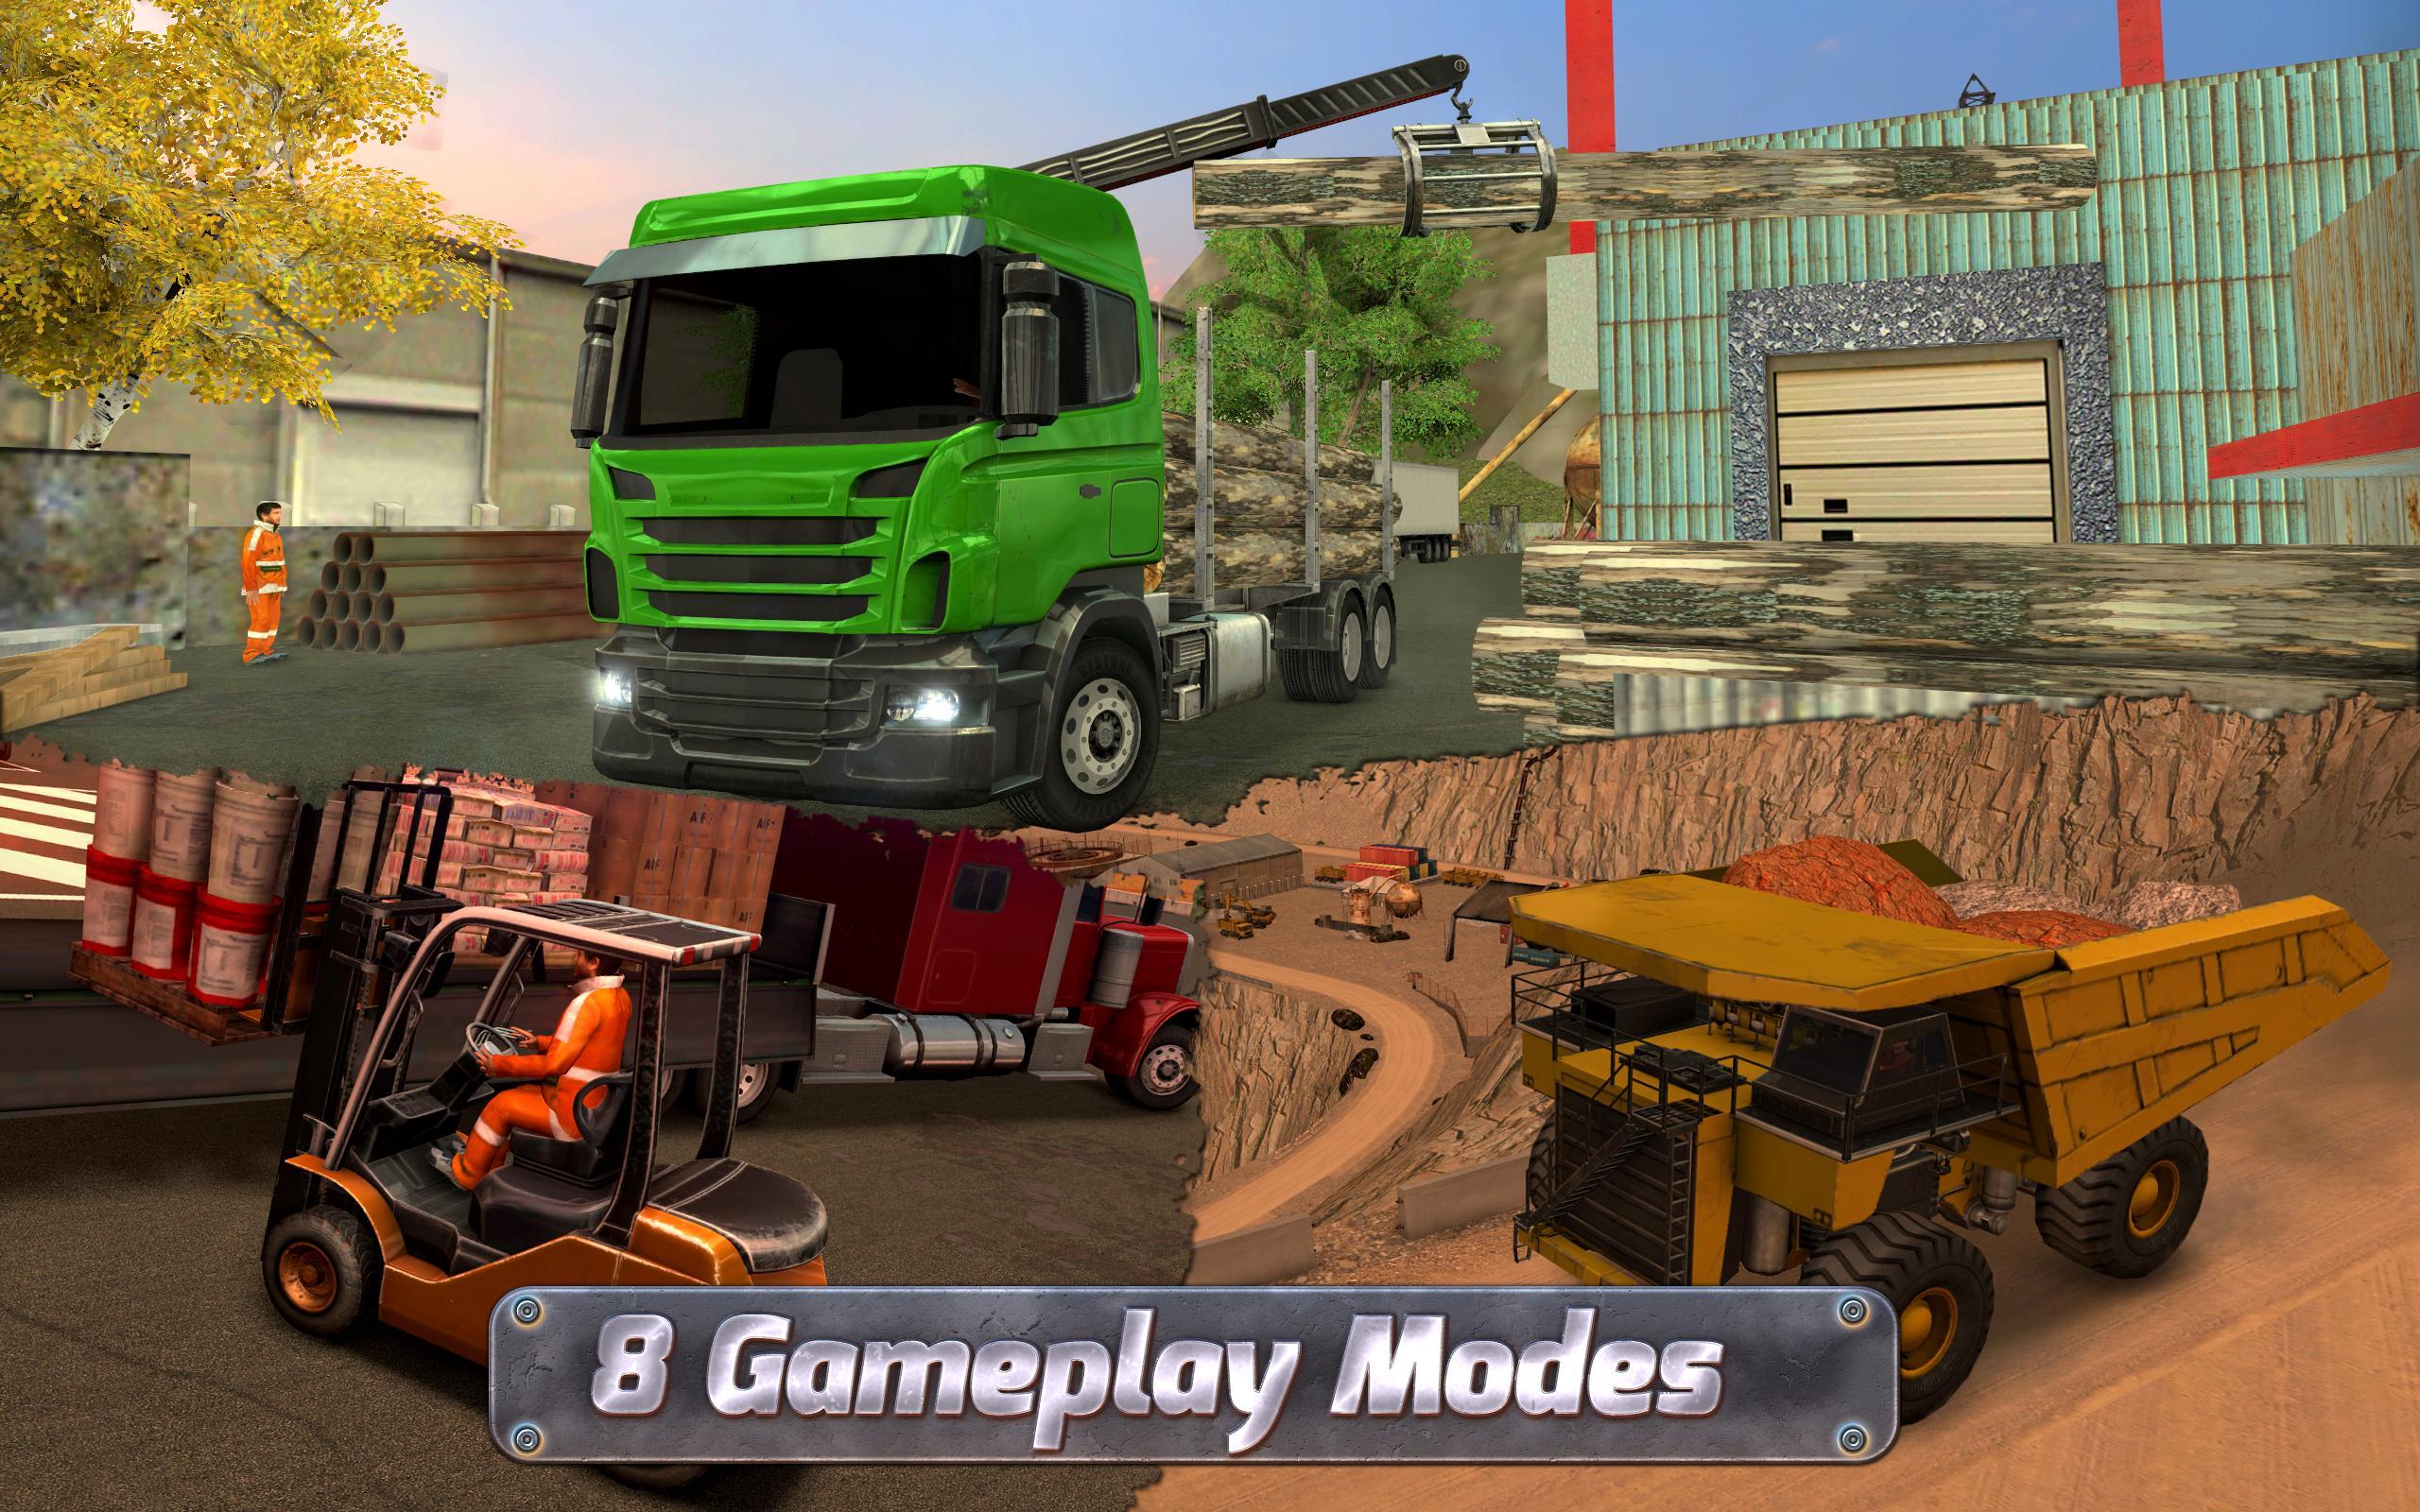 Truck simulator pro 3. Extreme Truck Simulator. Truck Construction симулятор 2017. Симулятор спецтехники 2. Машины Конструктион симулятор.